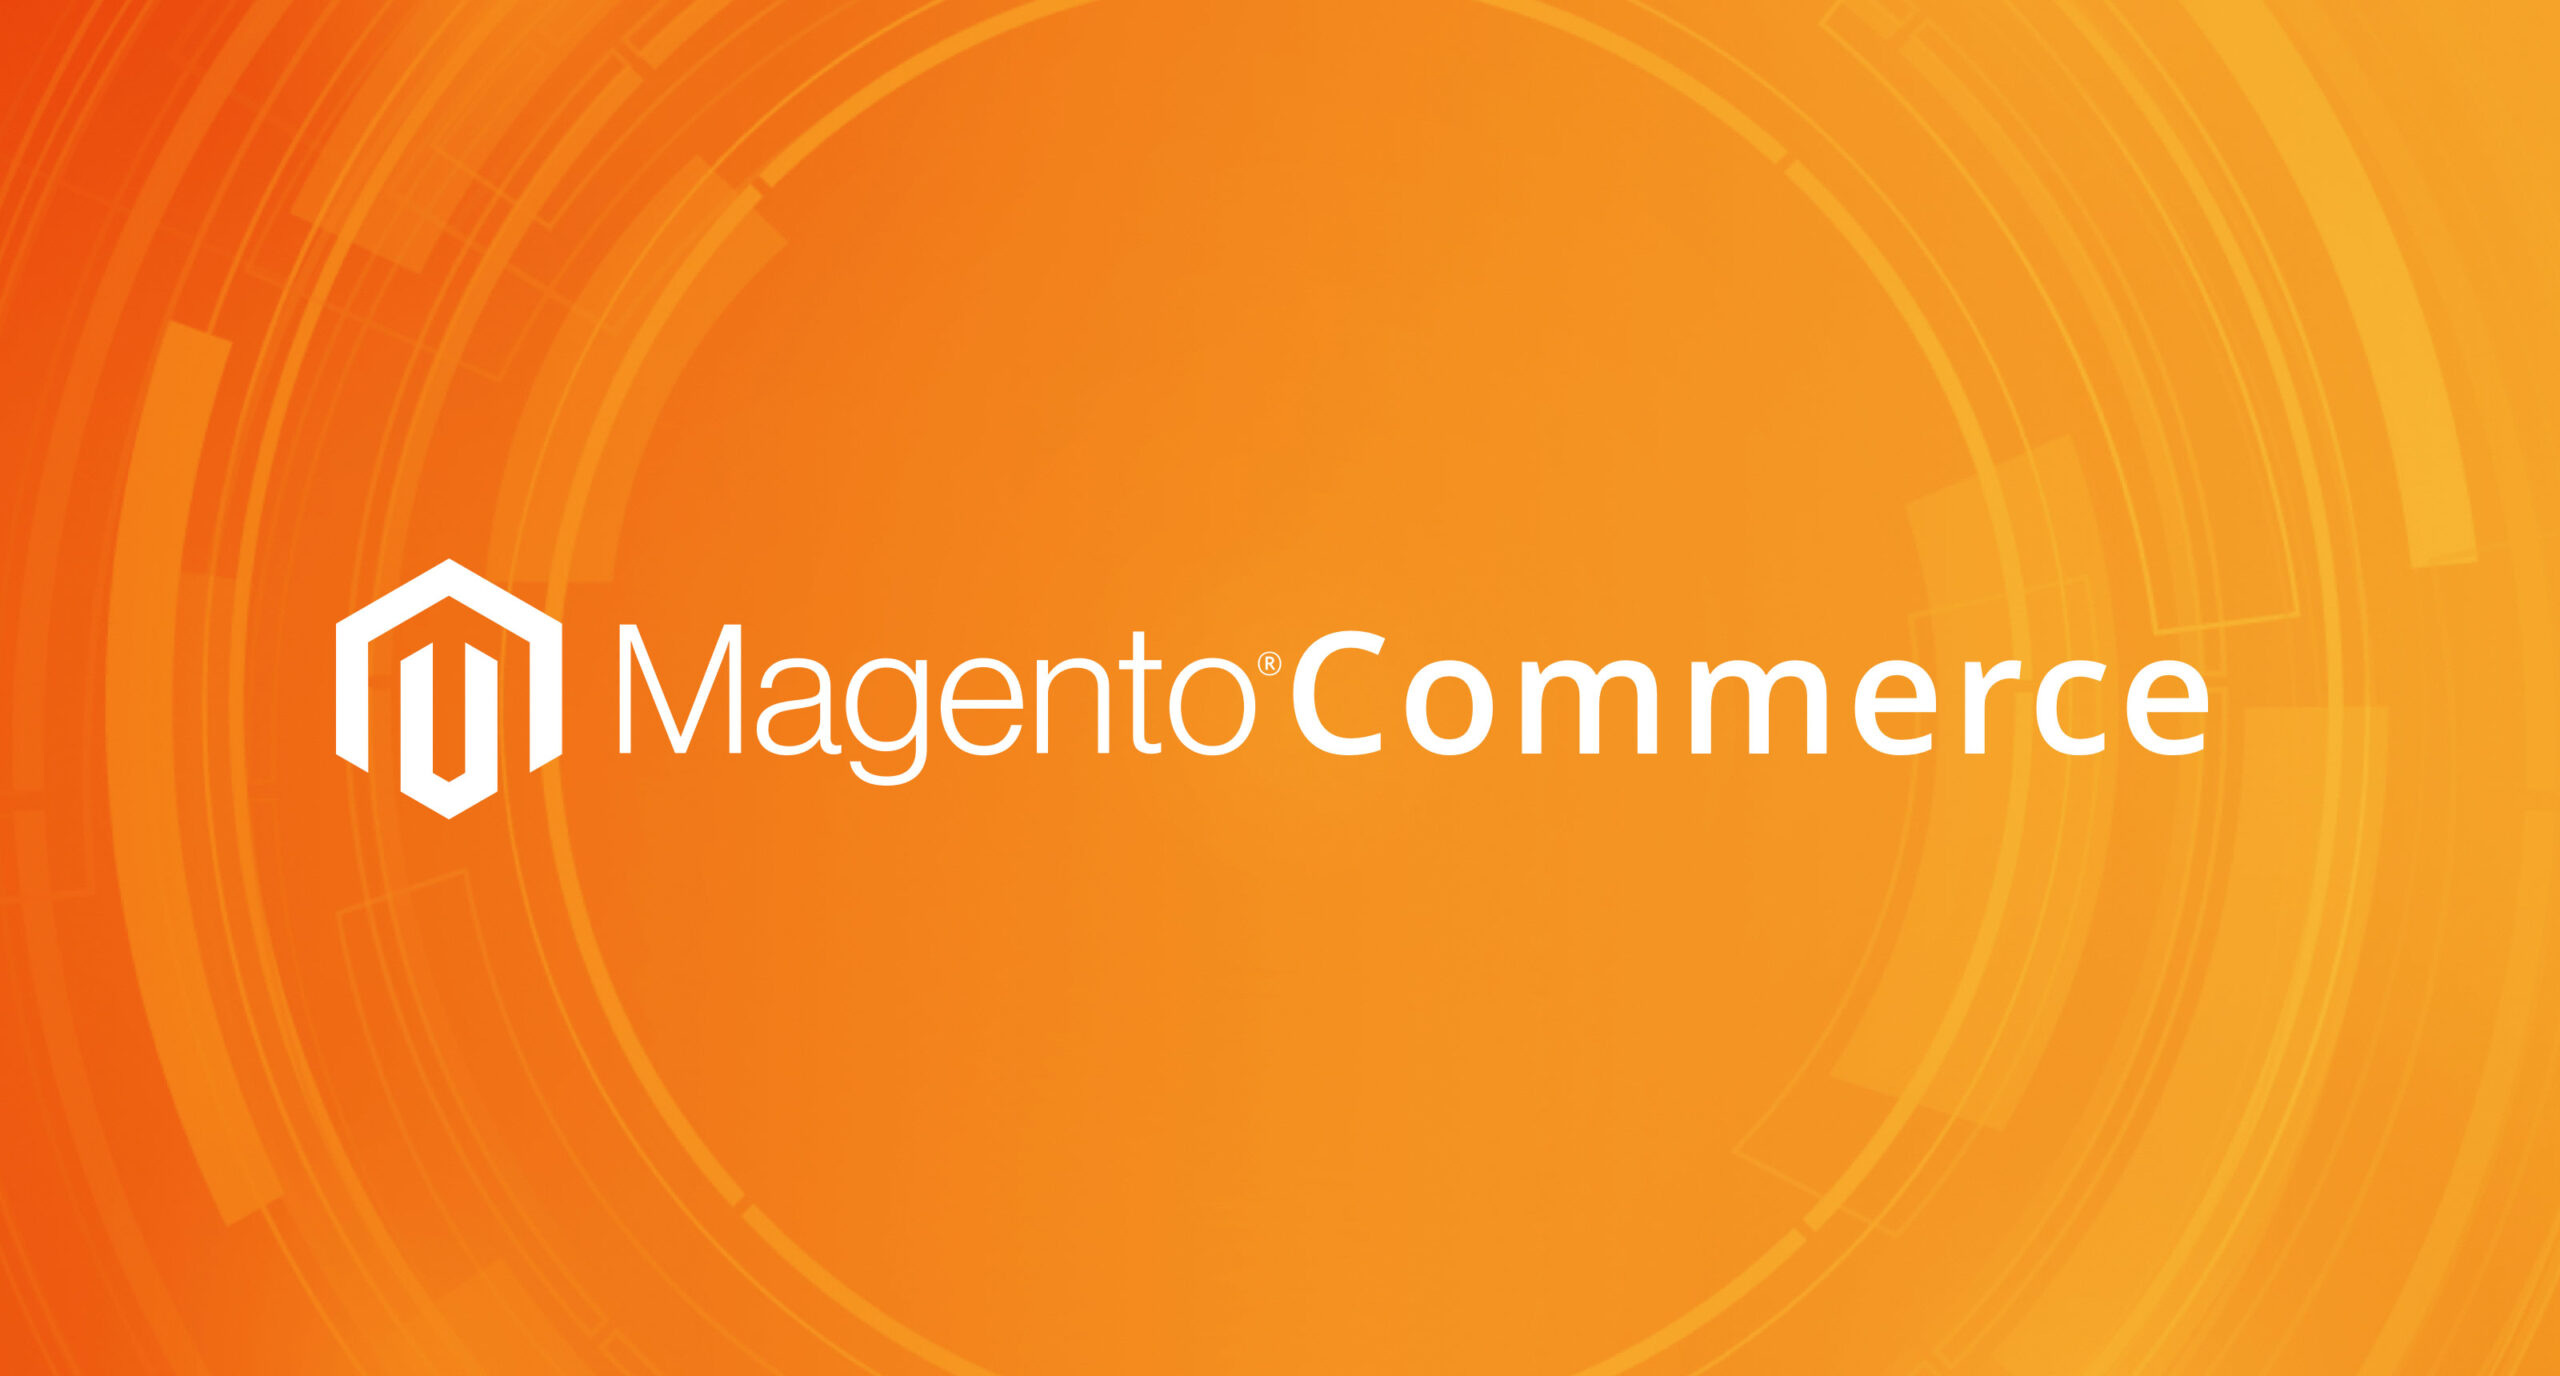 Magento commerce vs. open source